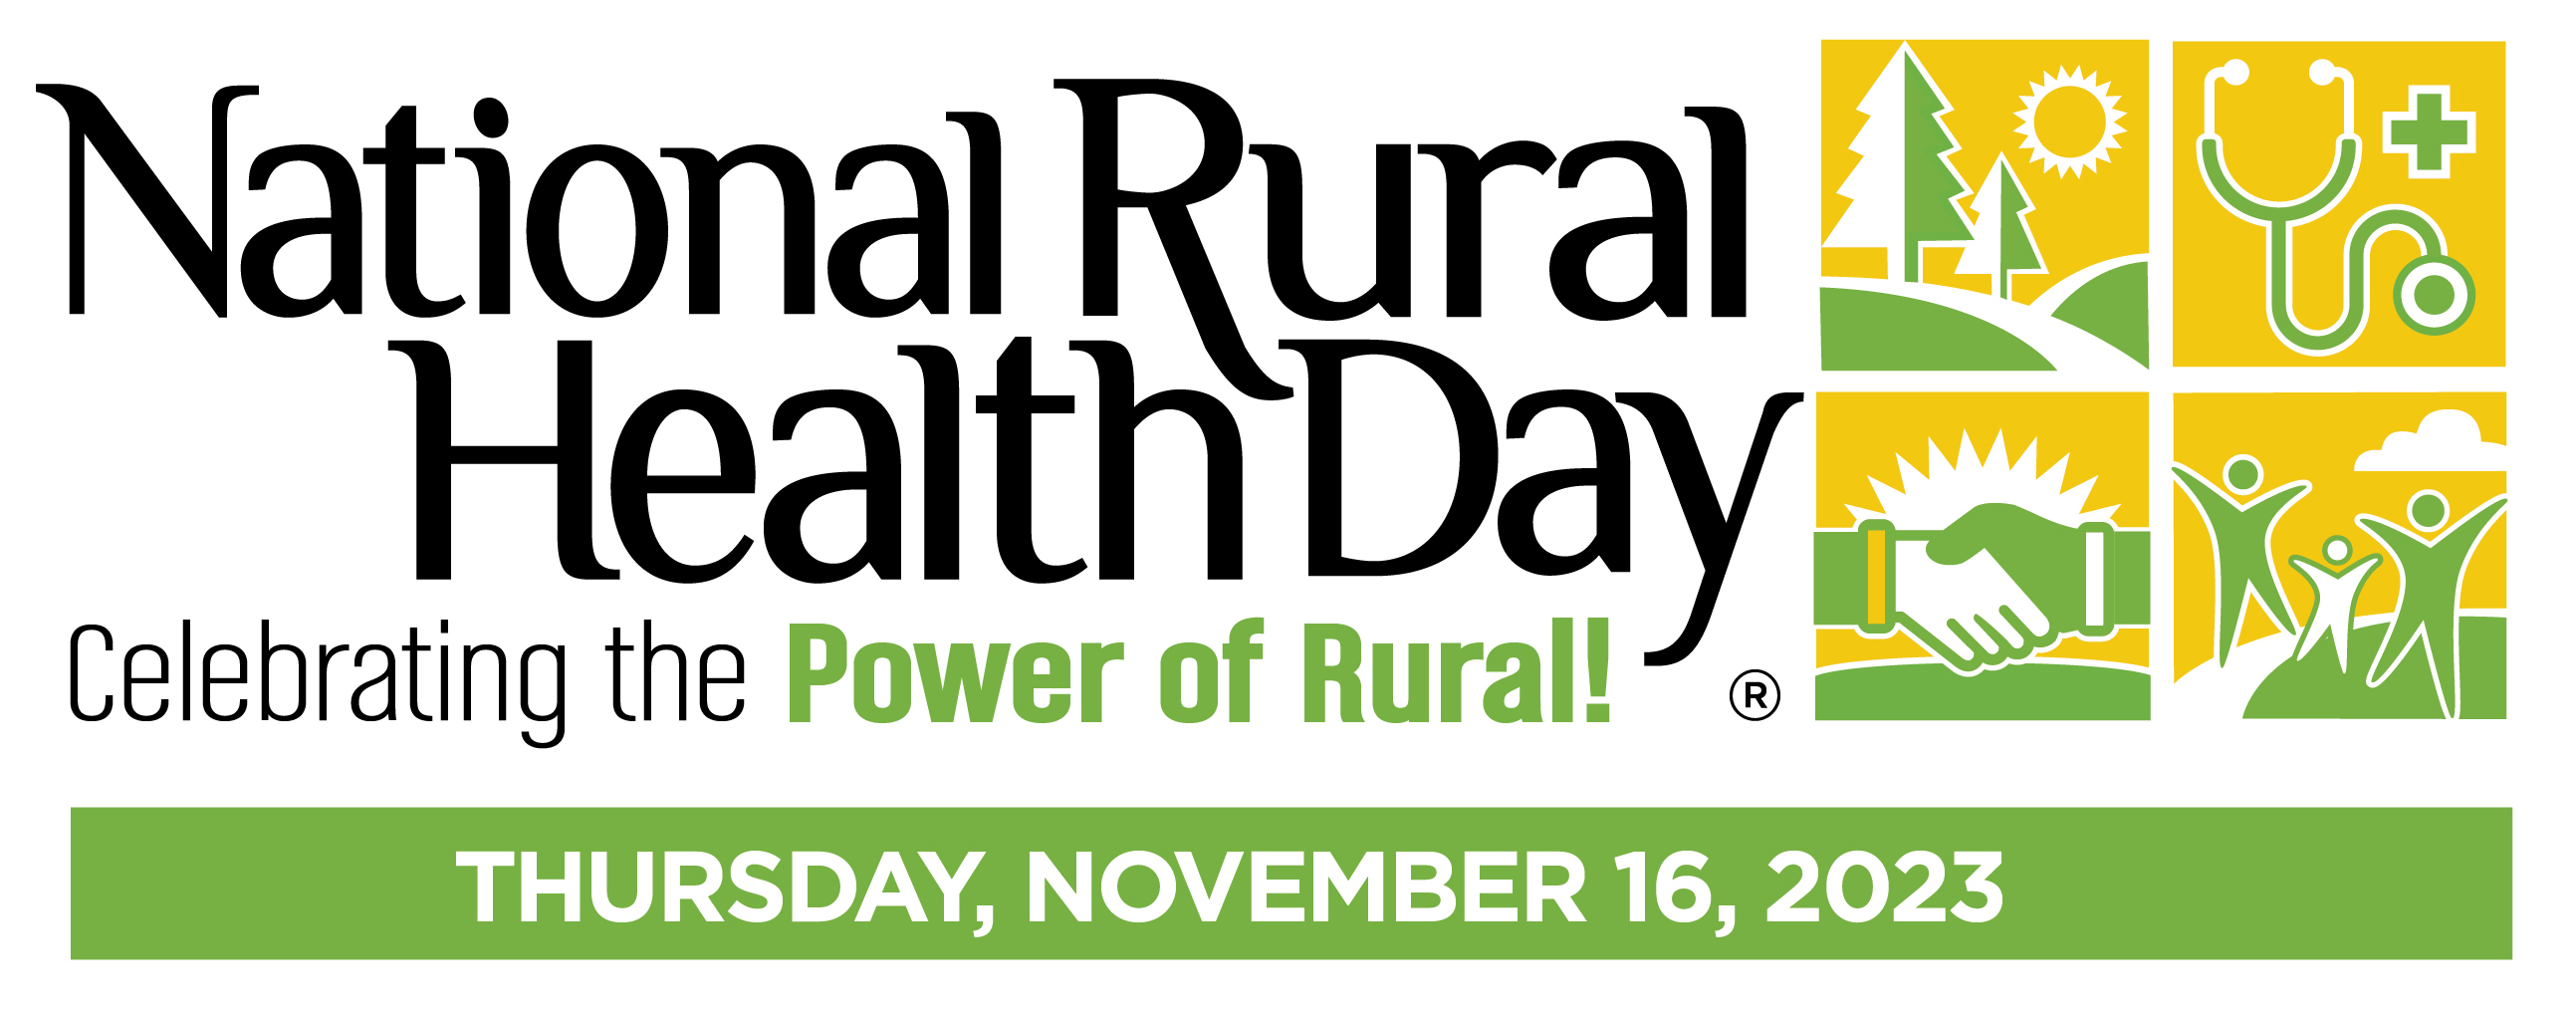 National Rural Health Day 2022 Logo